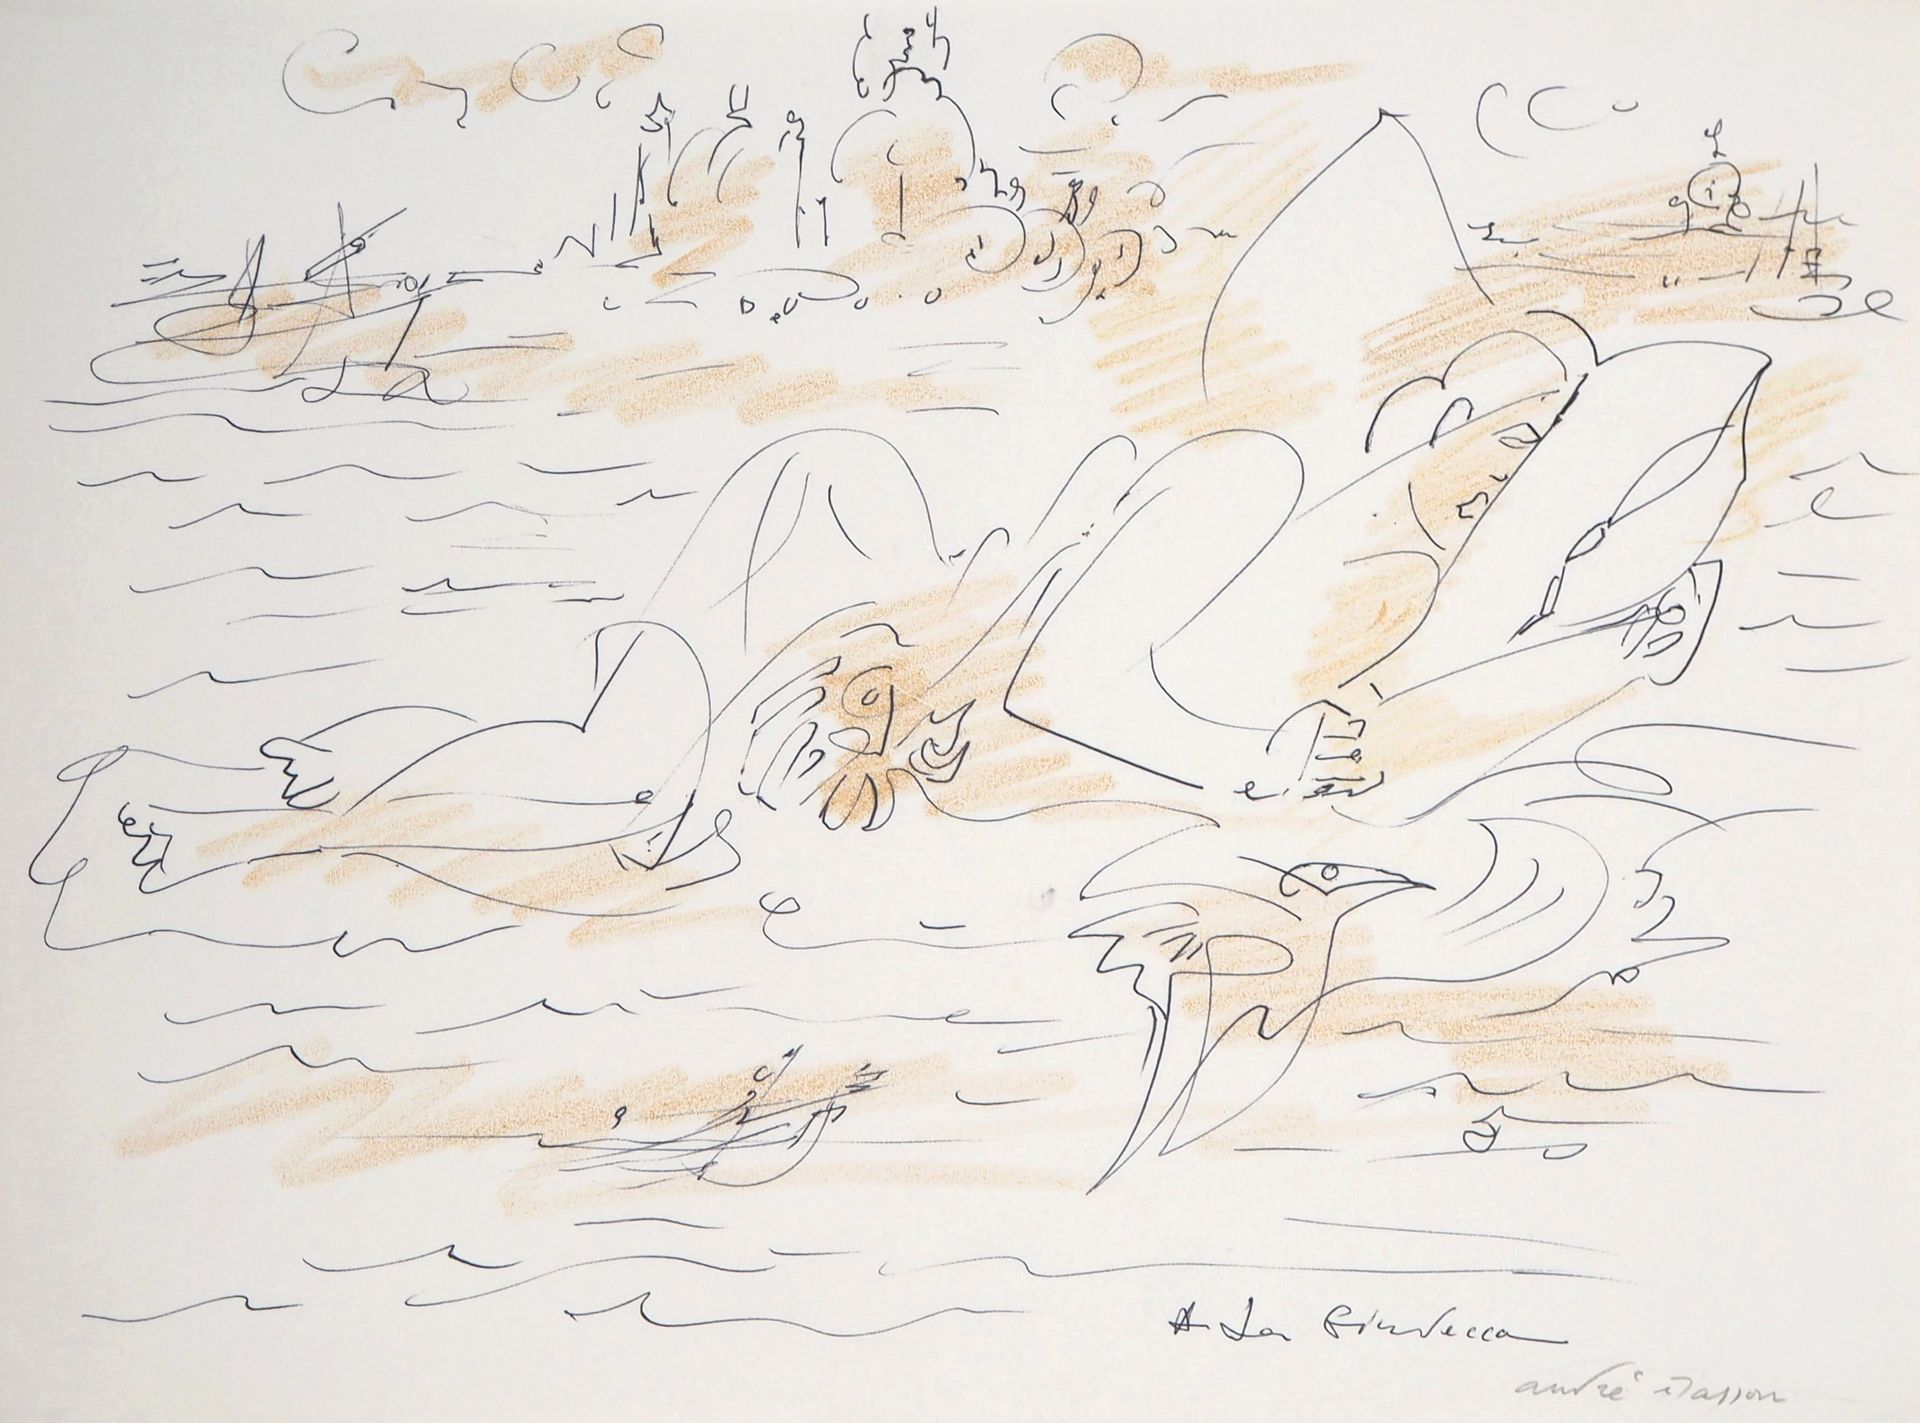 André MASSON André MASSON

En la Giudecca, Venecia (Desnudo en la laguna)

Dibuj&hellip;